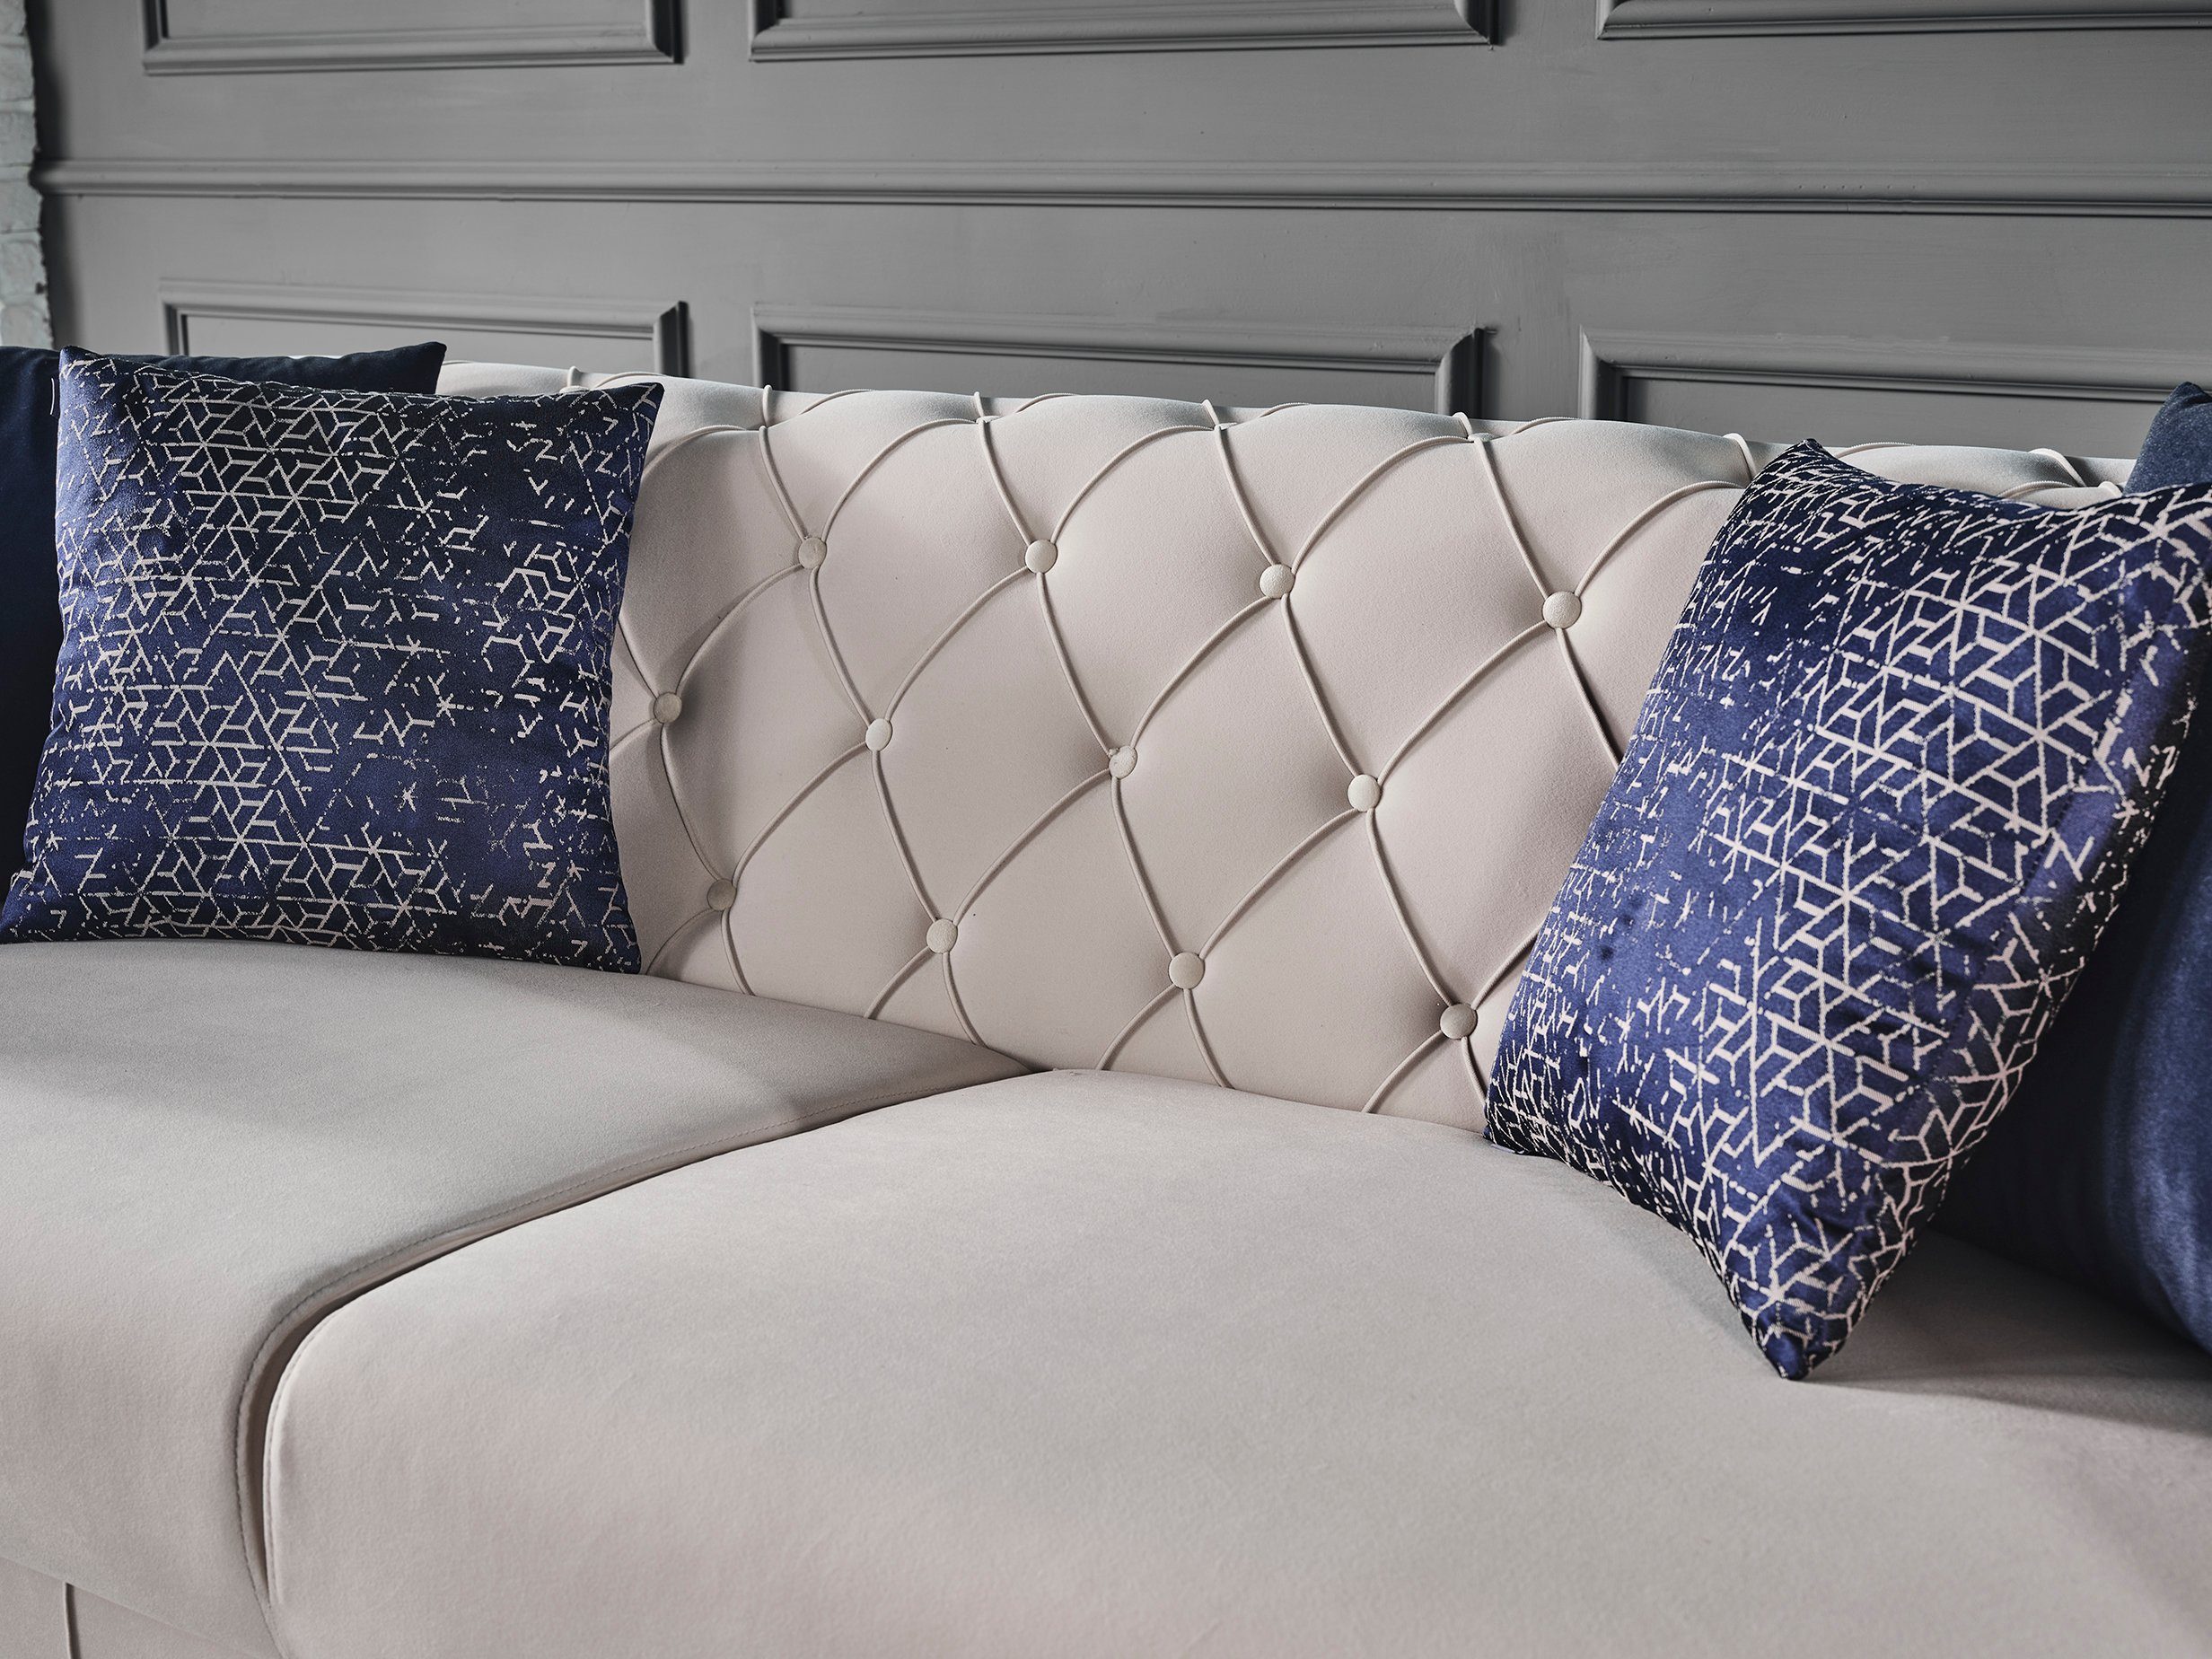 1 Quality,strapazierfähiger Möbel Sofa QUEBEC, Villa Handmade Creme Mikrofaser Teil, Samtstoff